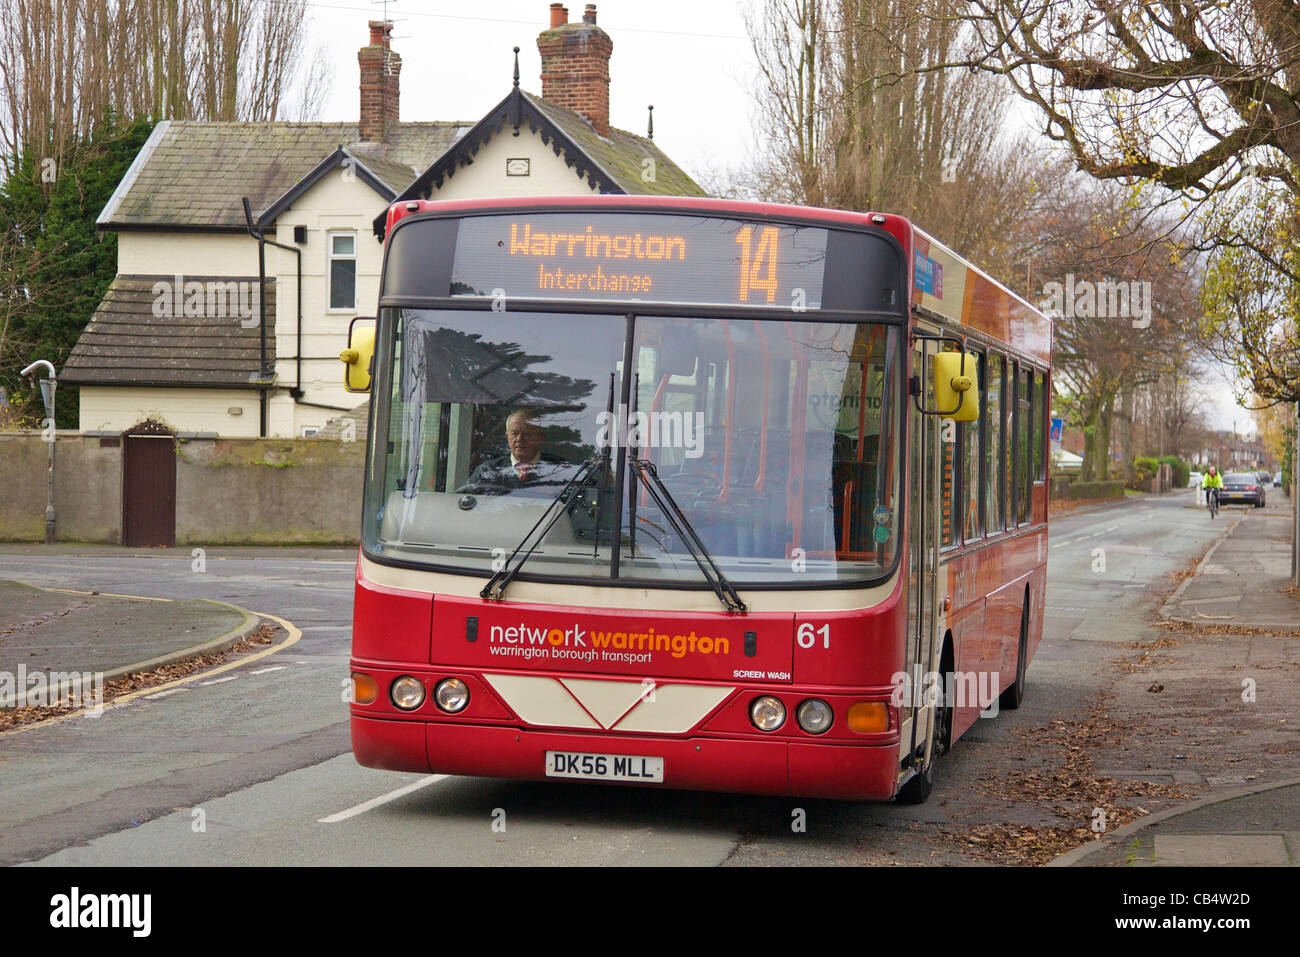 Network Warrington. Warrington Borough transport bus. Urban single decker Stock Photo